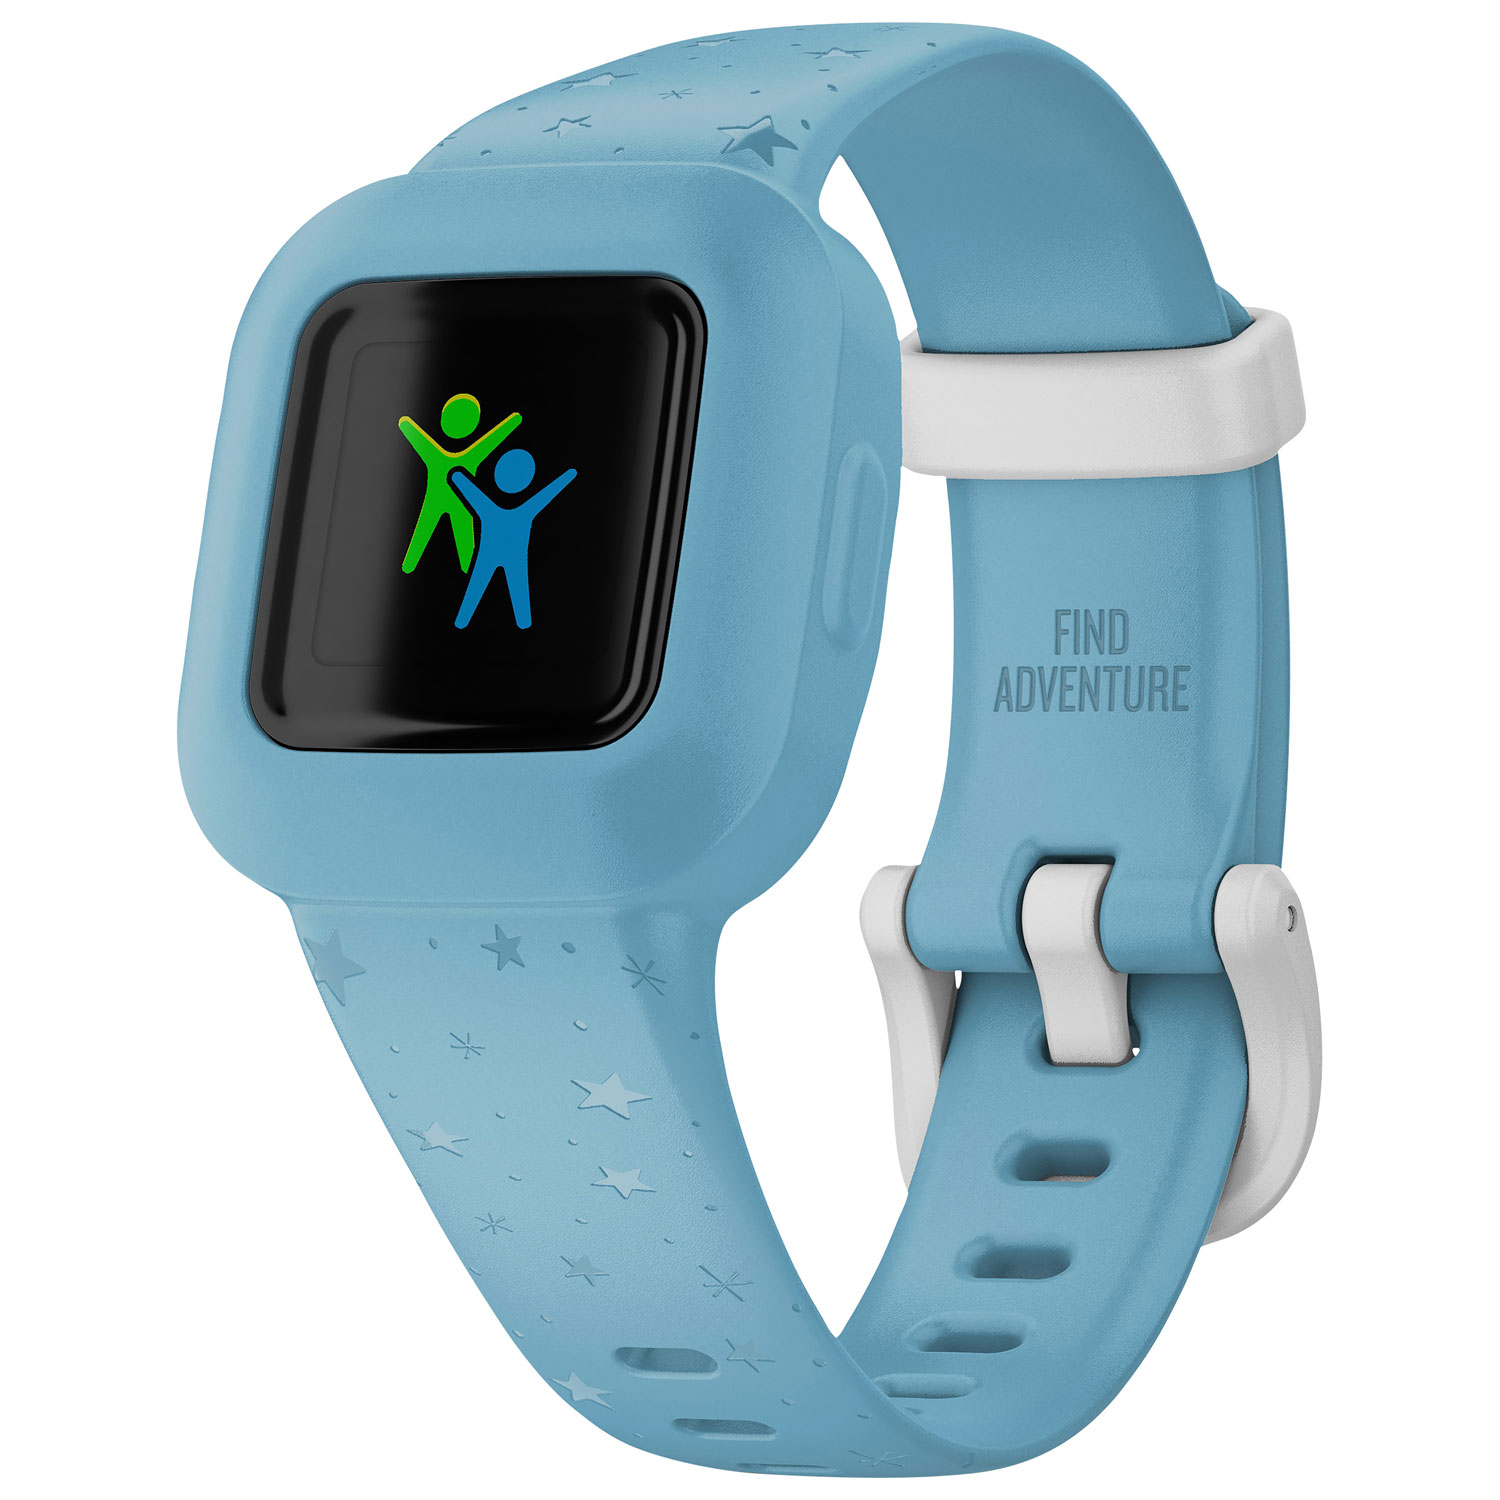 Garmin vivofit jr 3 Kids Activity Tracker - Blue | Best Buy Canada